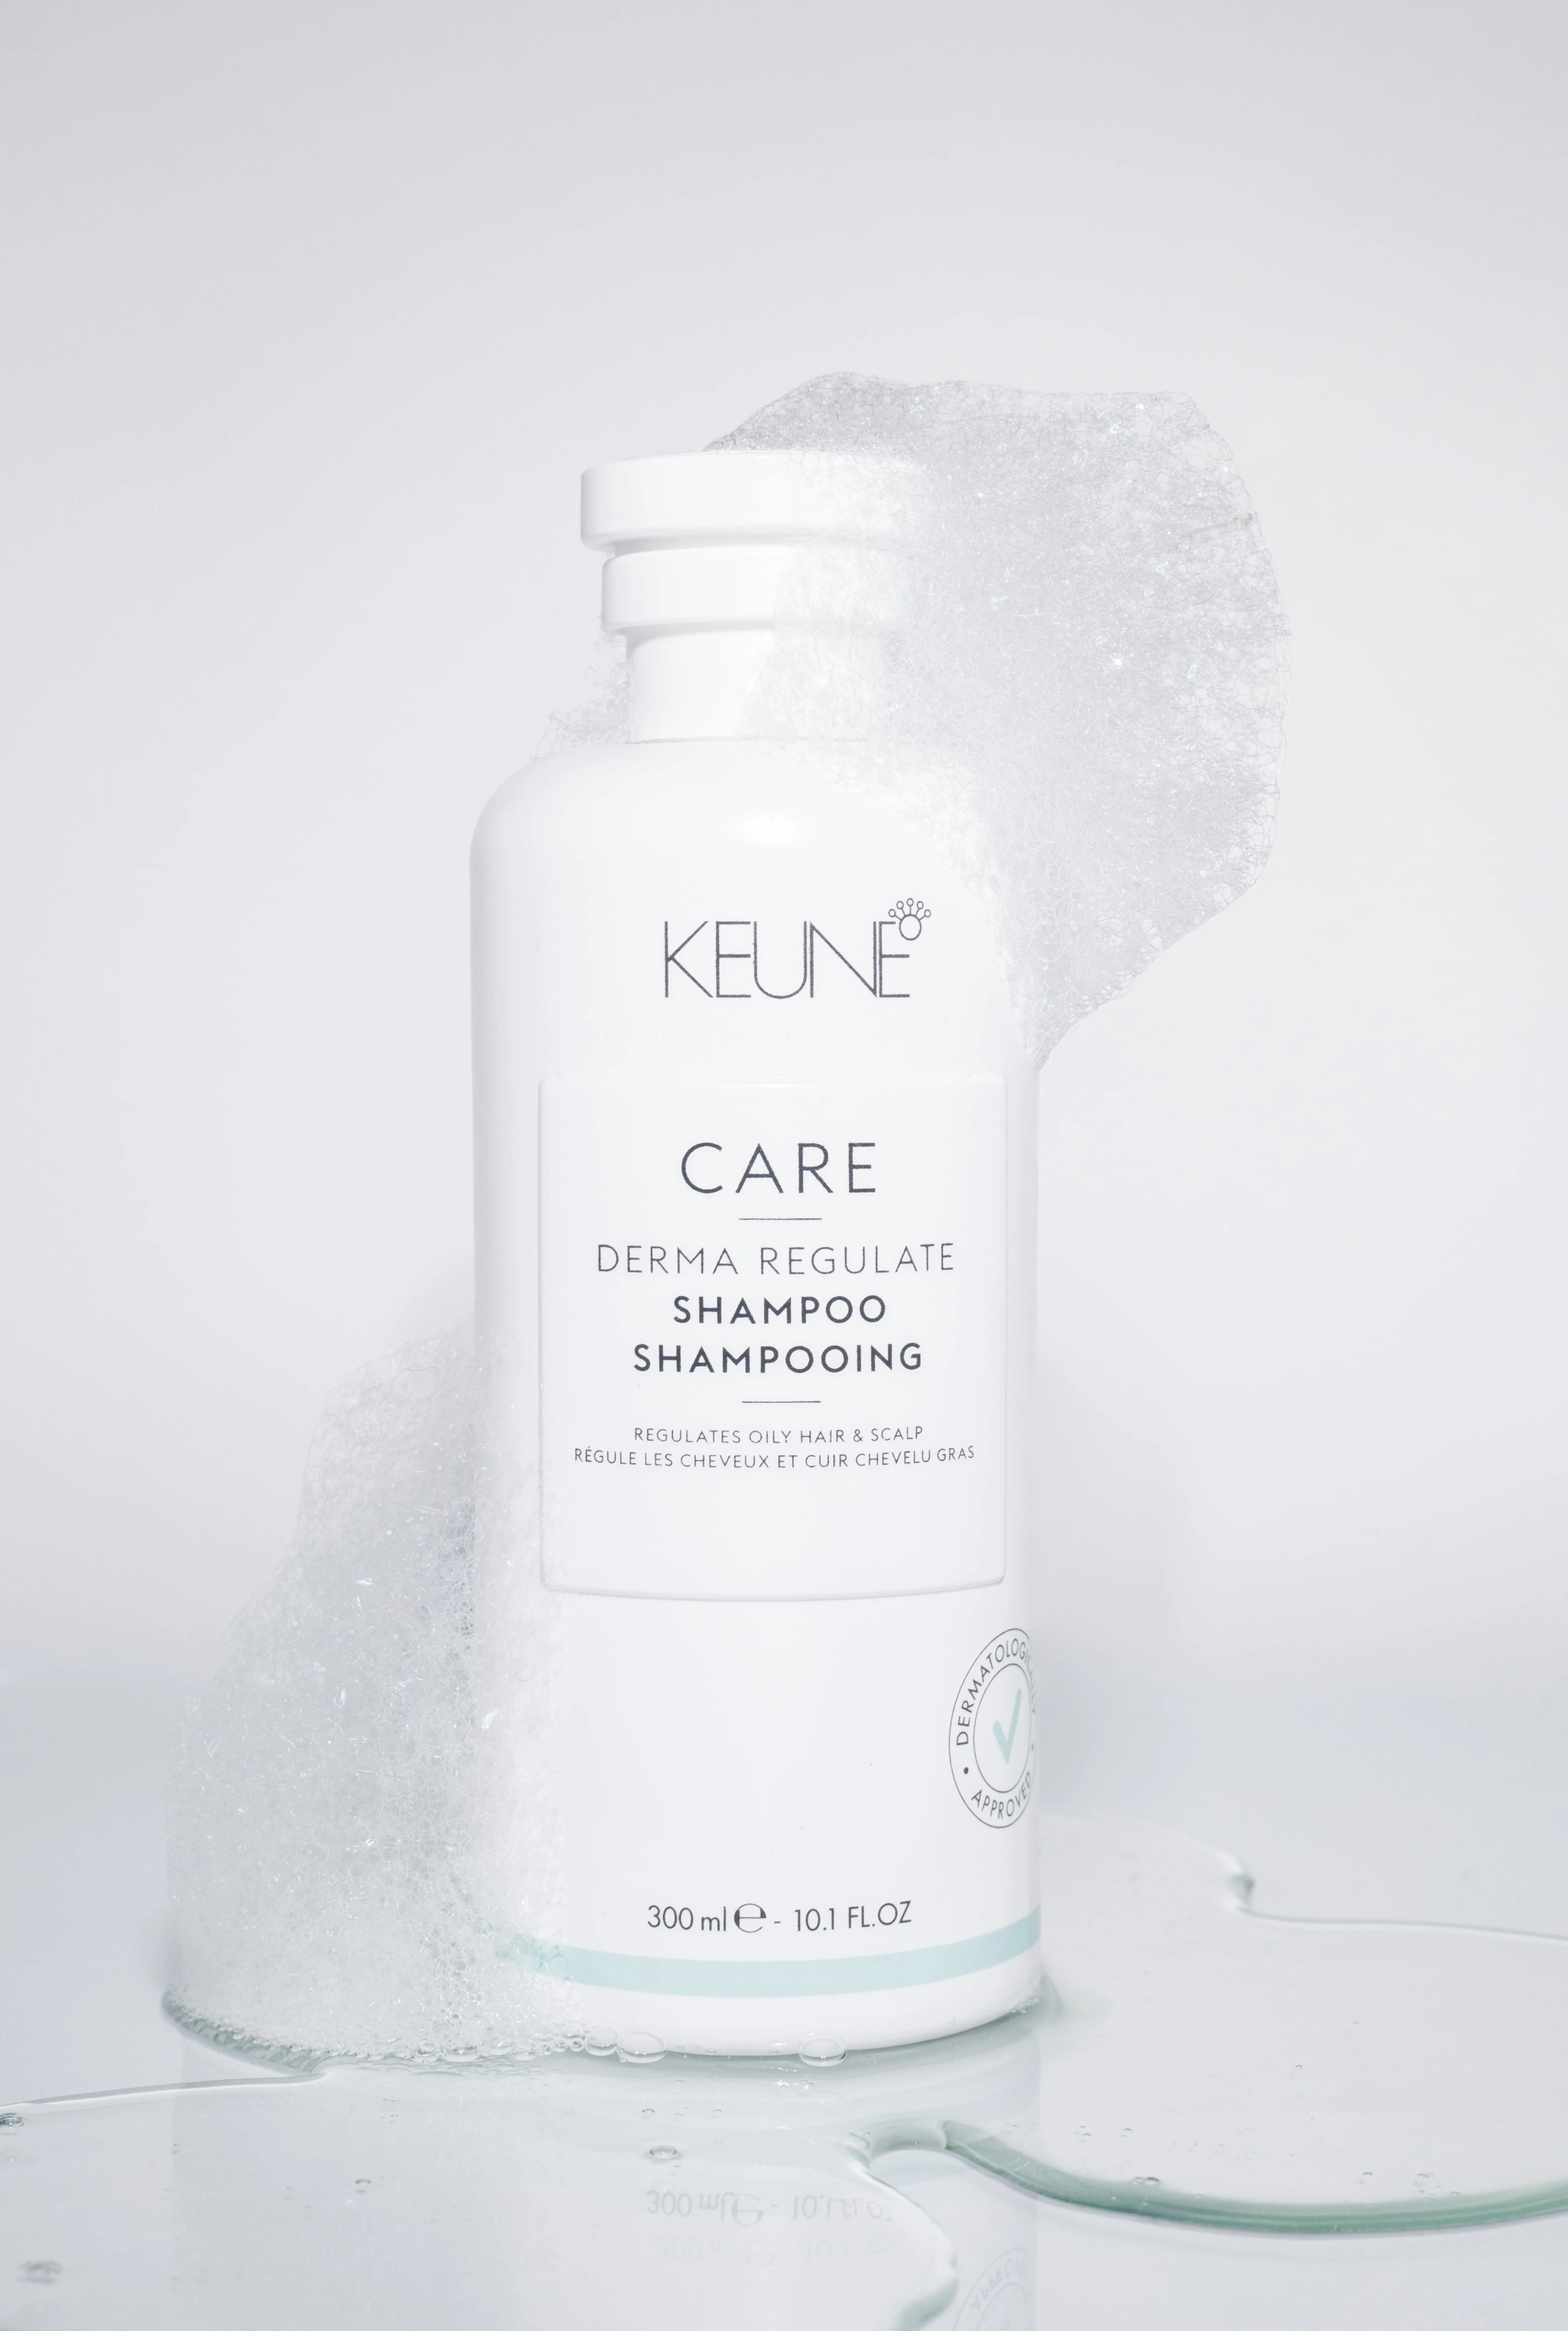 Image of bottle and texture Keune Care Derma Regulate Shampoo